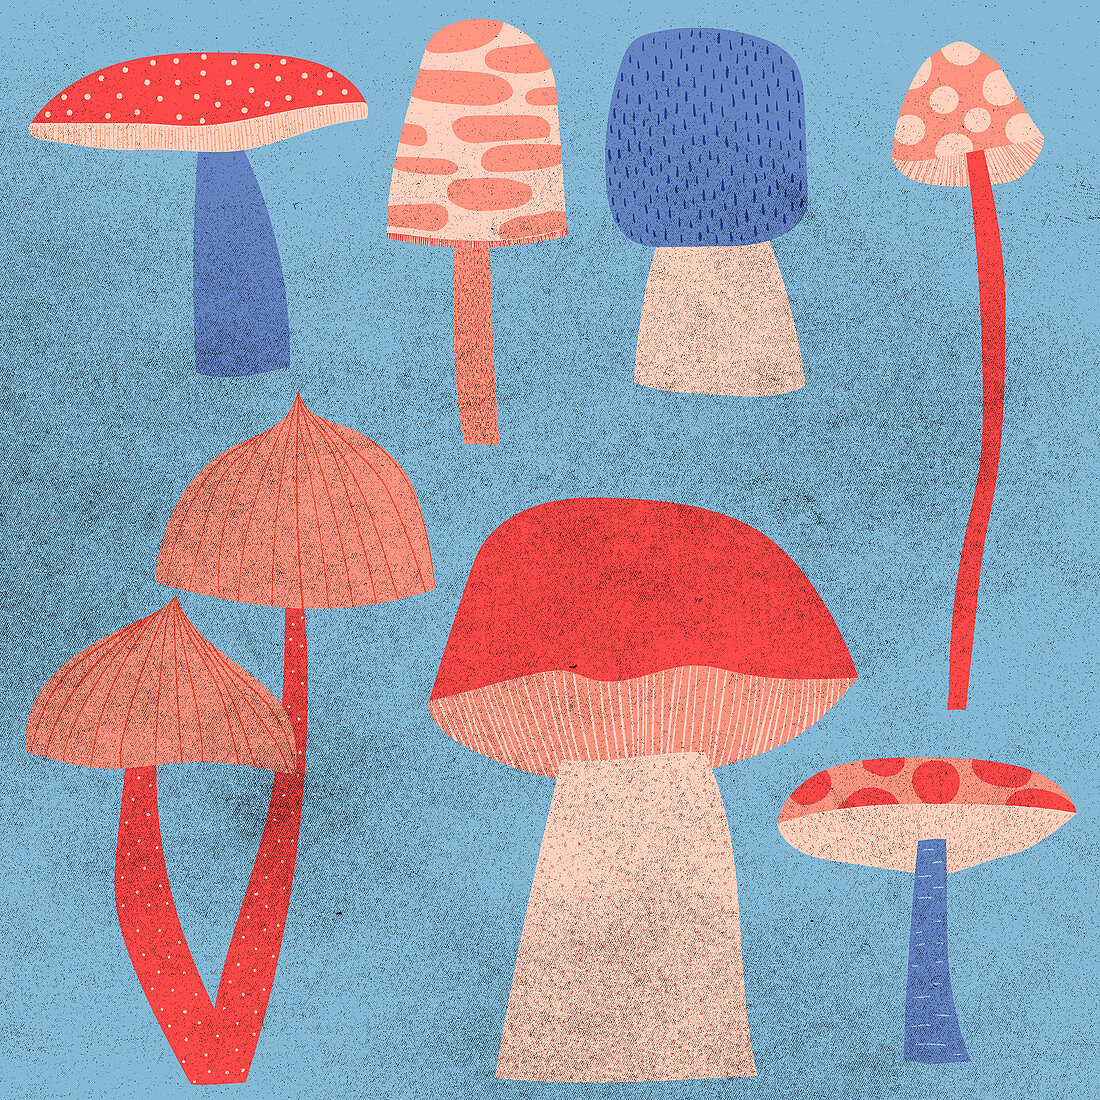 Collection of mushrooms, illustration